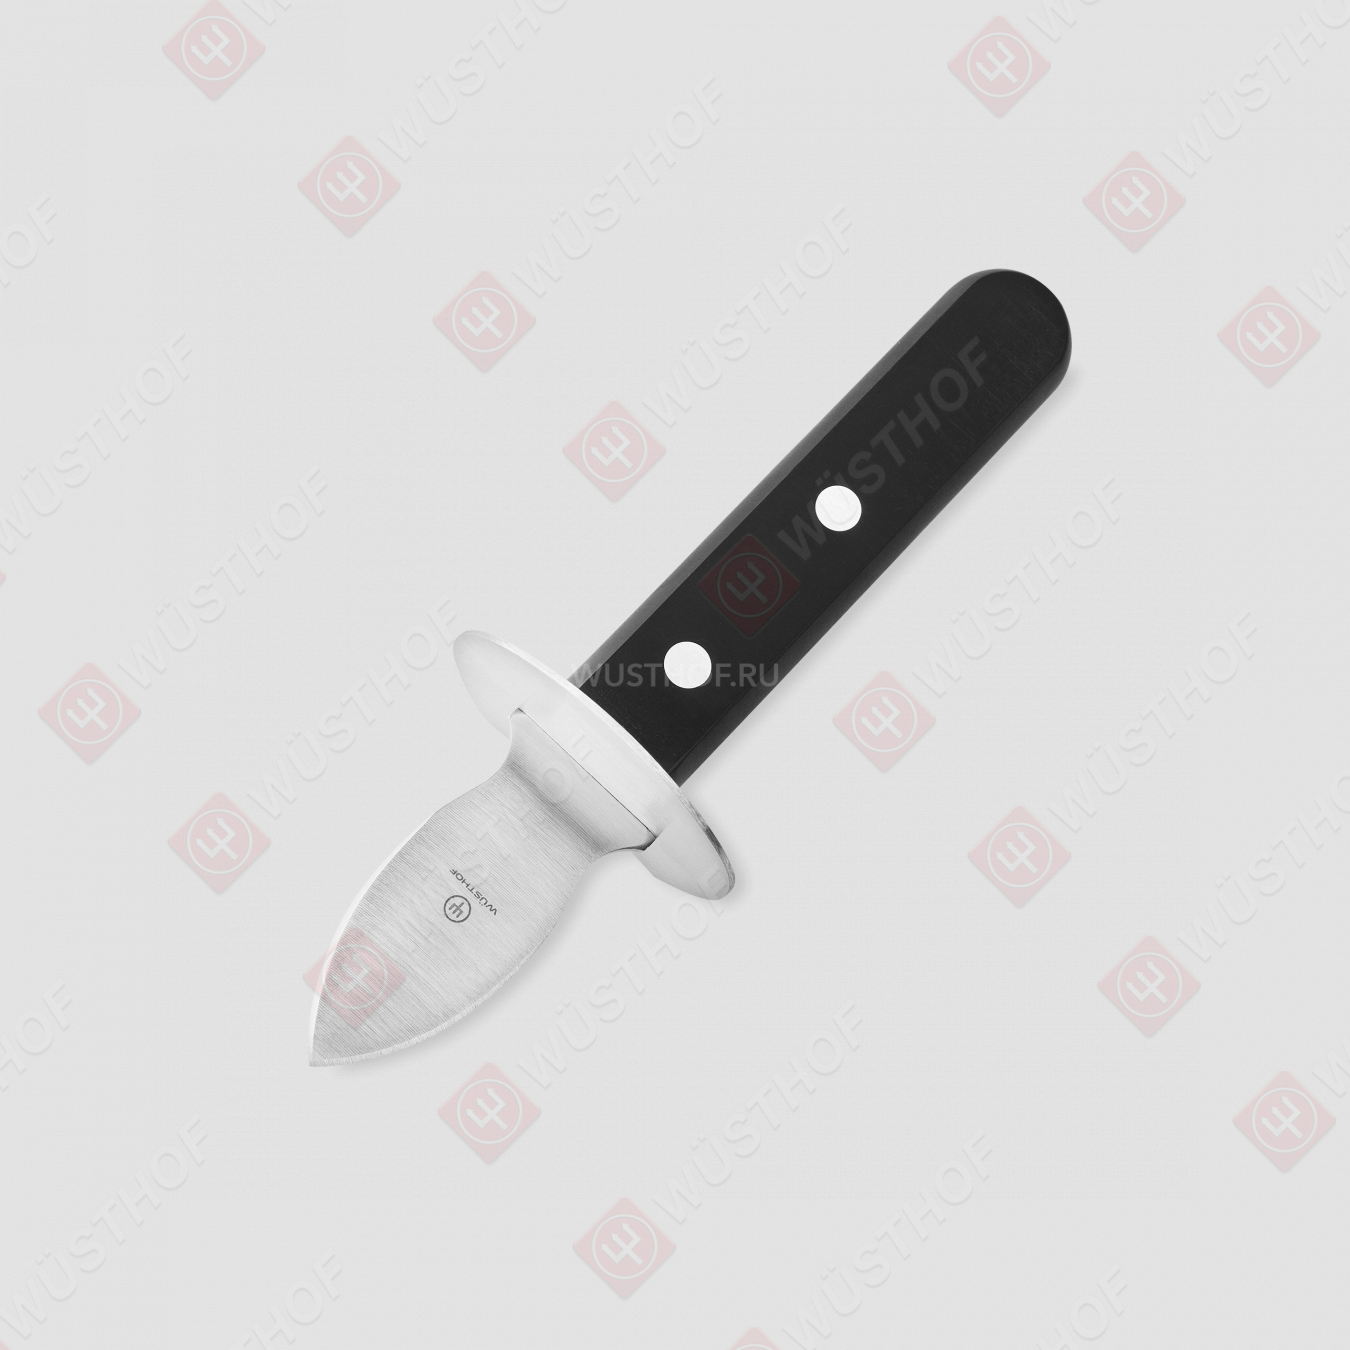 Нож для устриц 6 см, серия Professional tools, WUESTHOF, Золинген, Германия